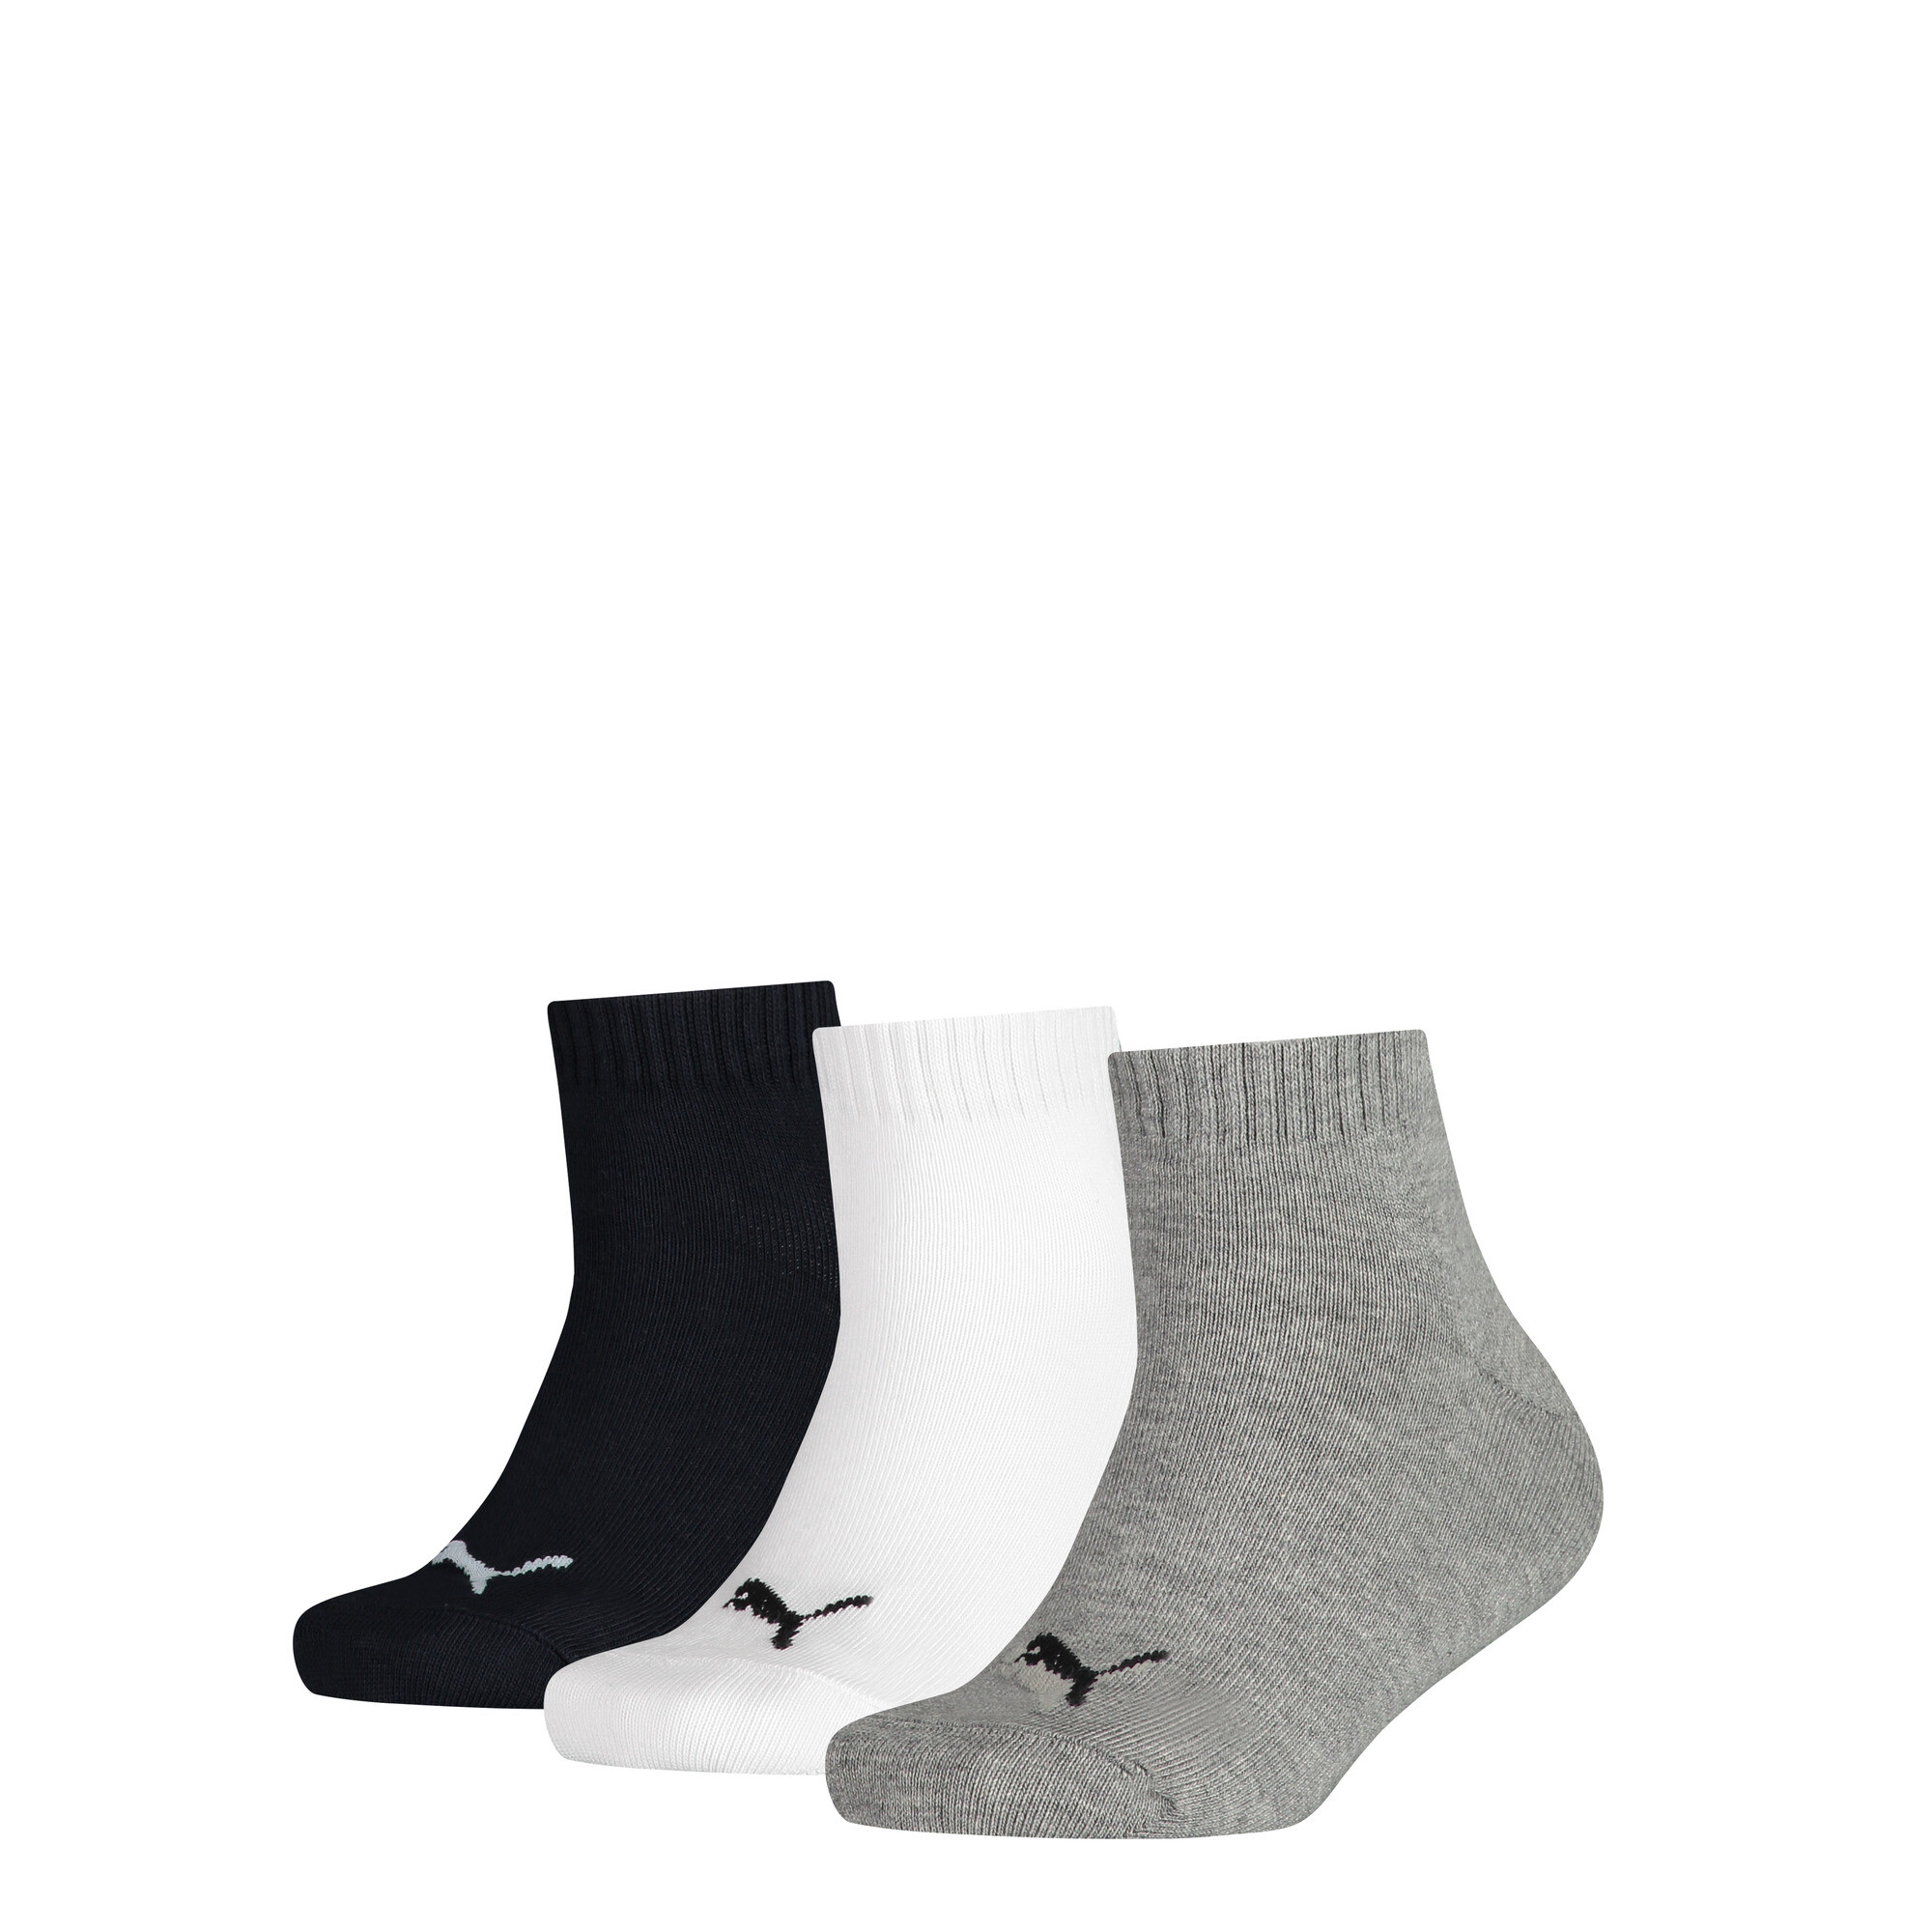 Kids' PUMA Quarter Socks 3 Pack In Grey/White/Black, Size 27-30